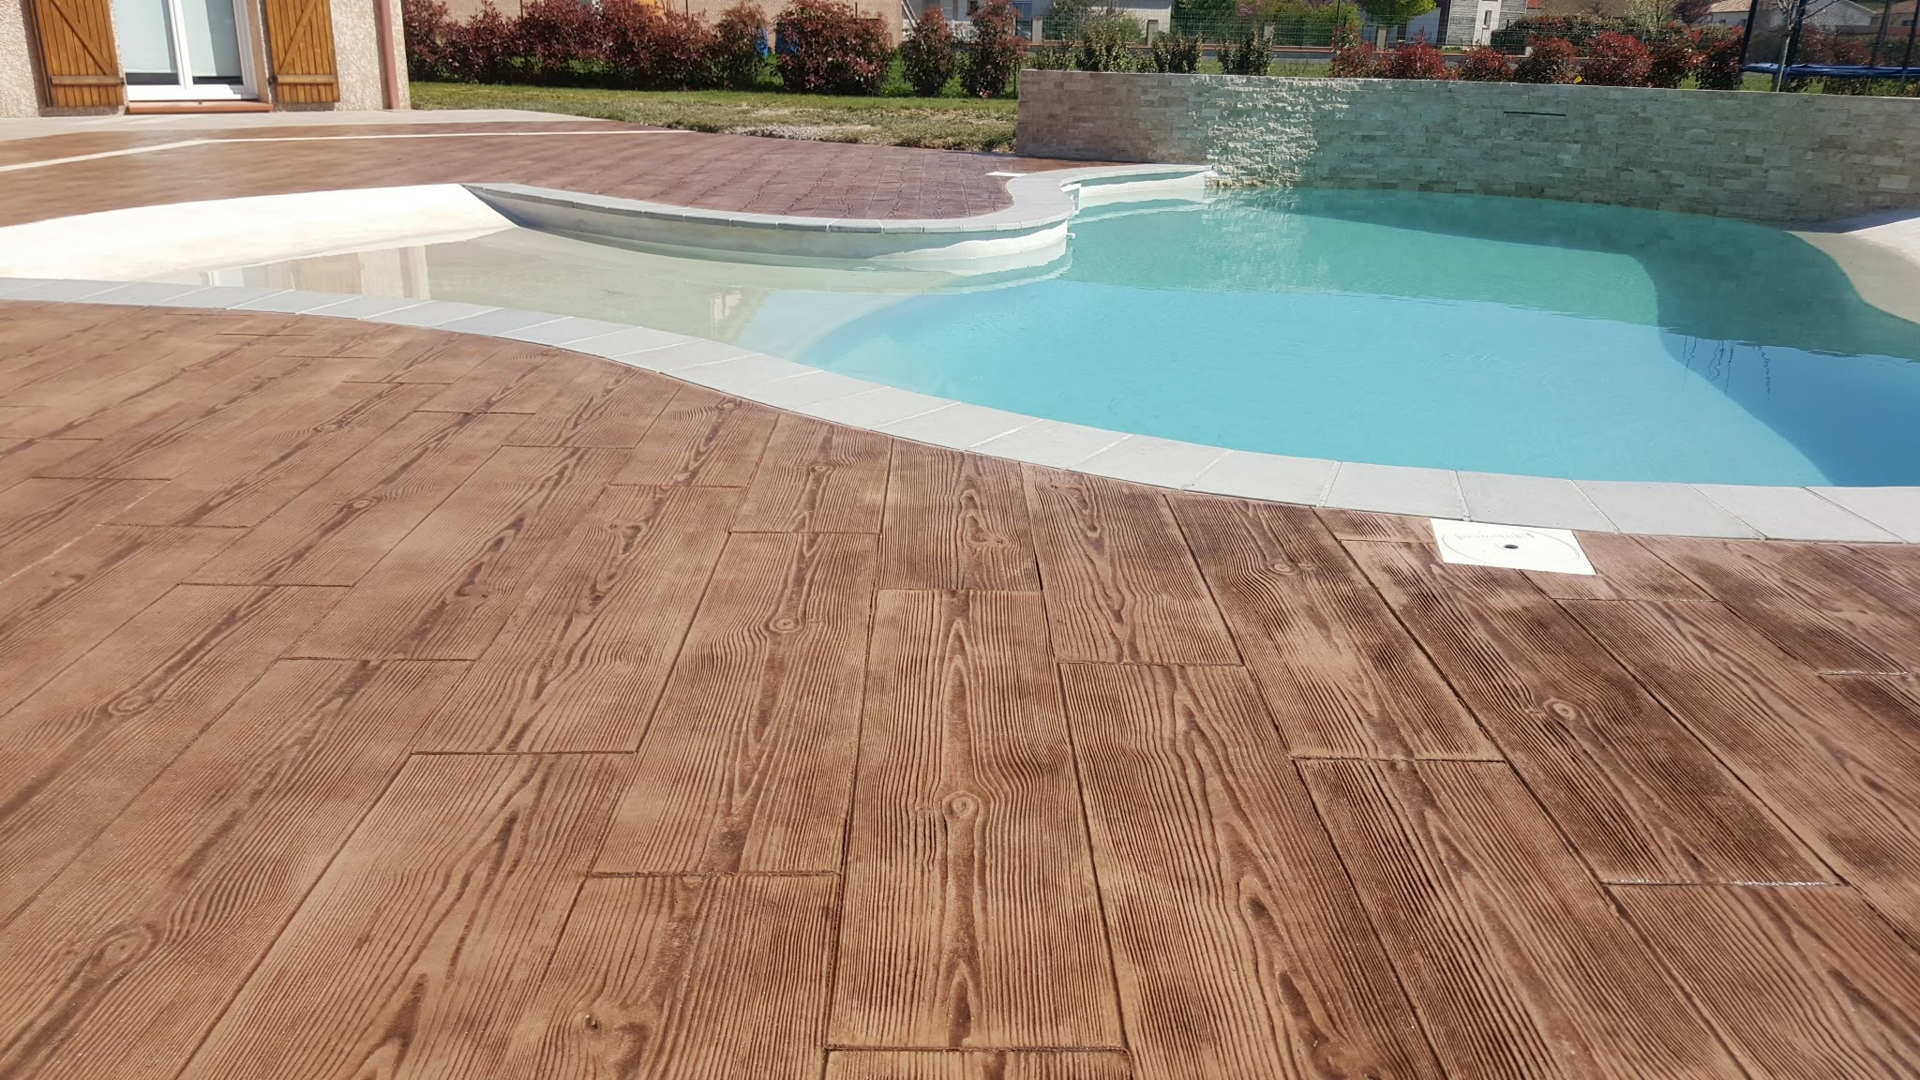 Imitation wood imprinted concrete on the ground around the pool